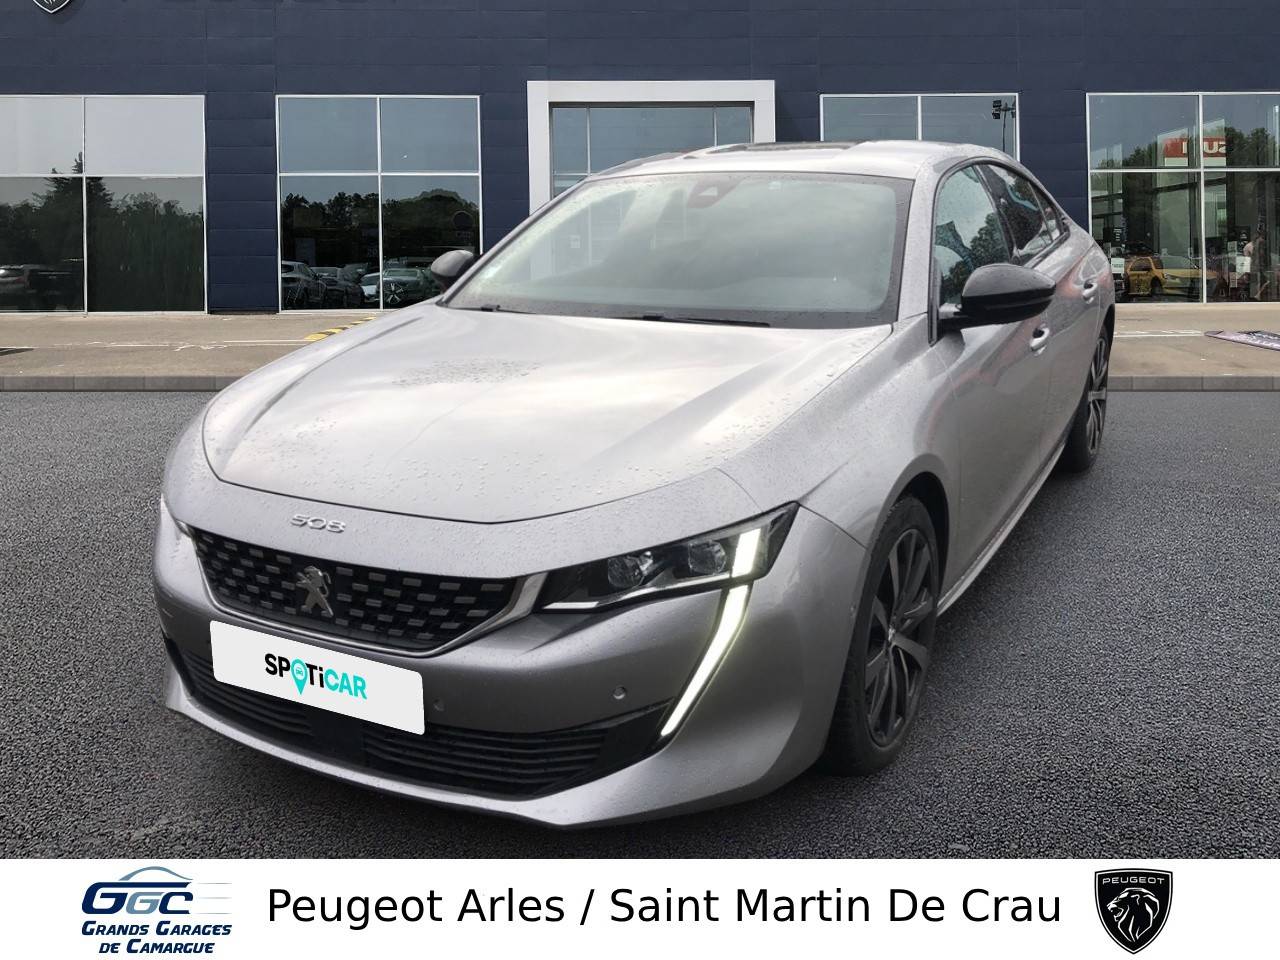 PEUGEOT 508 | 508 BlueHDi 160 ch S&S EAT8 occasion - Peugeot Arles